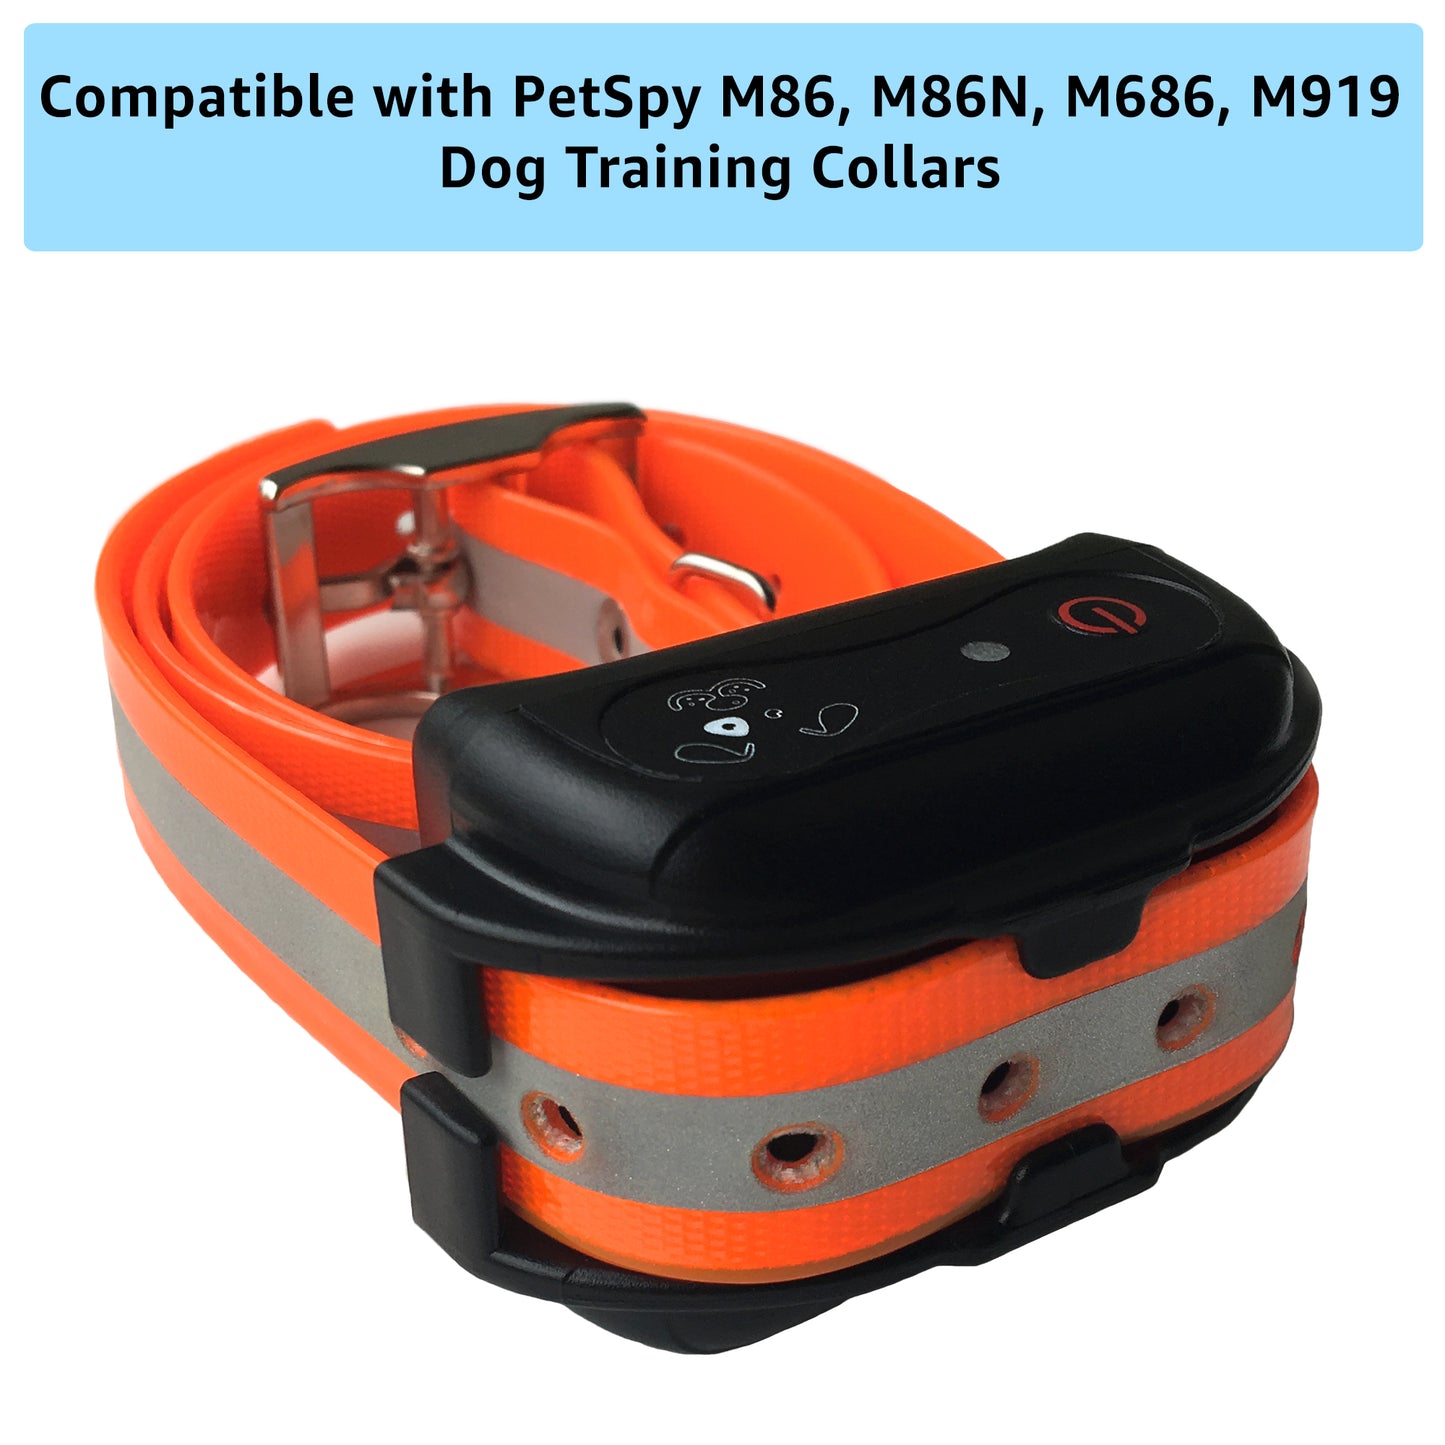 Reflective Dog Training Collar_compatible with PetSpy M86 M86N M686 M919 dog training collars